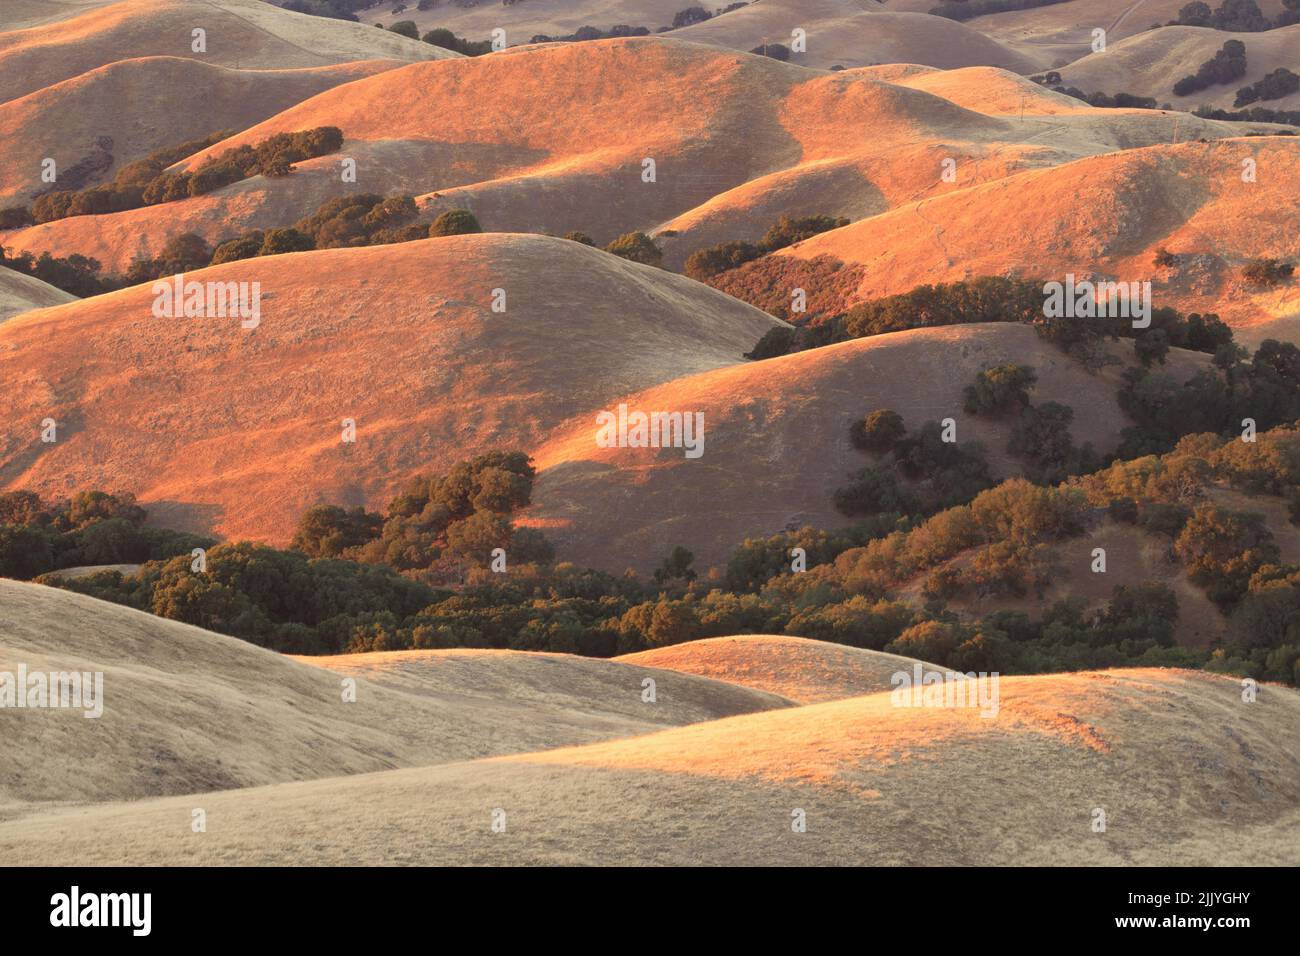 Soft Sunset Colors Painting California Golden Hills. Mission Peak Regional Preserve, Alameda County, California, USA. Stock Photo